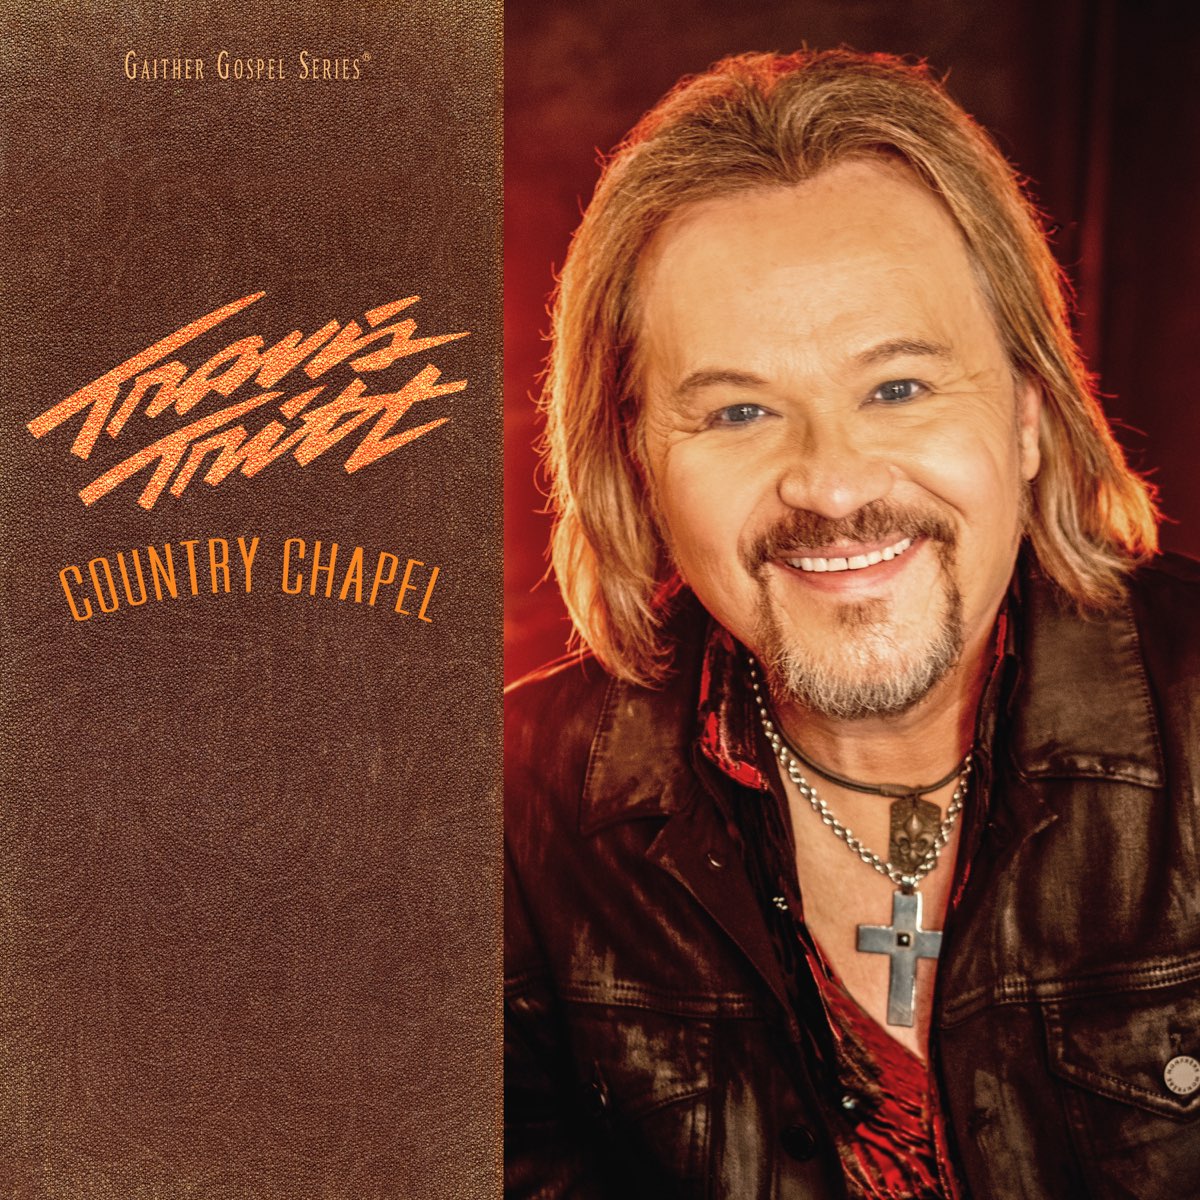 ‎Country Chapel - Album by Travis Tritt - Apple Music